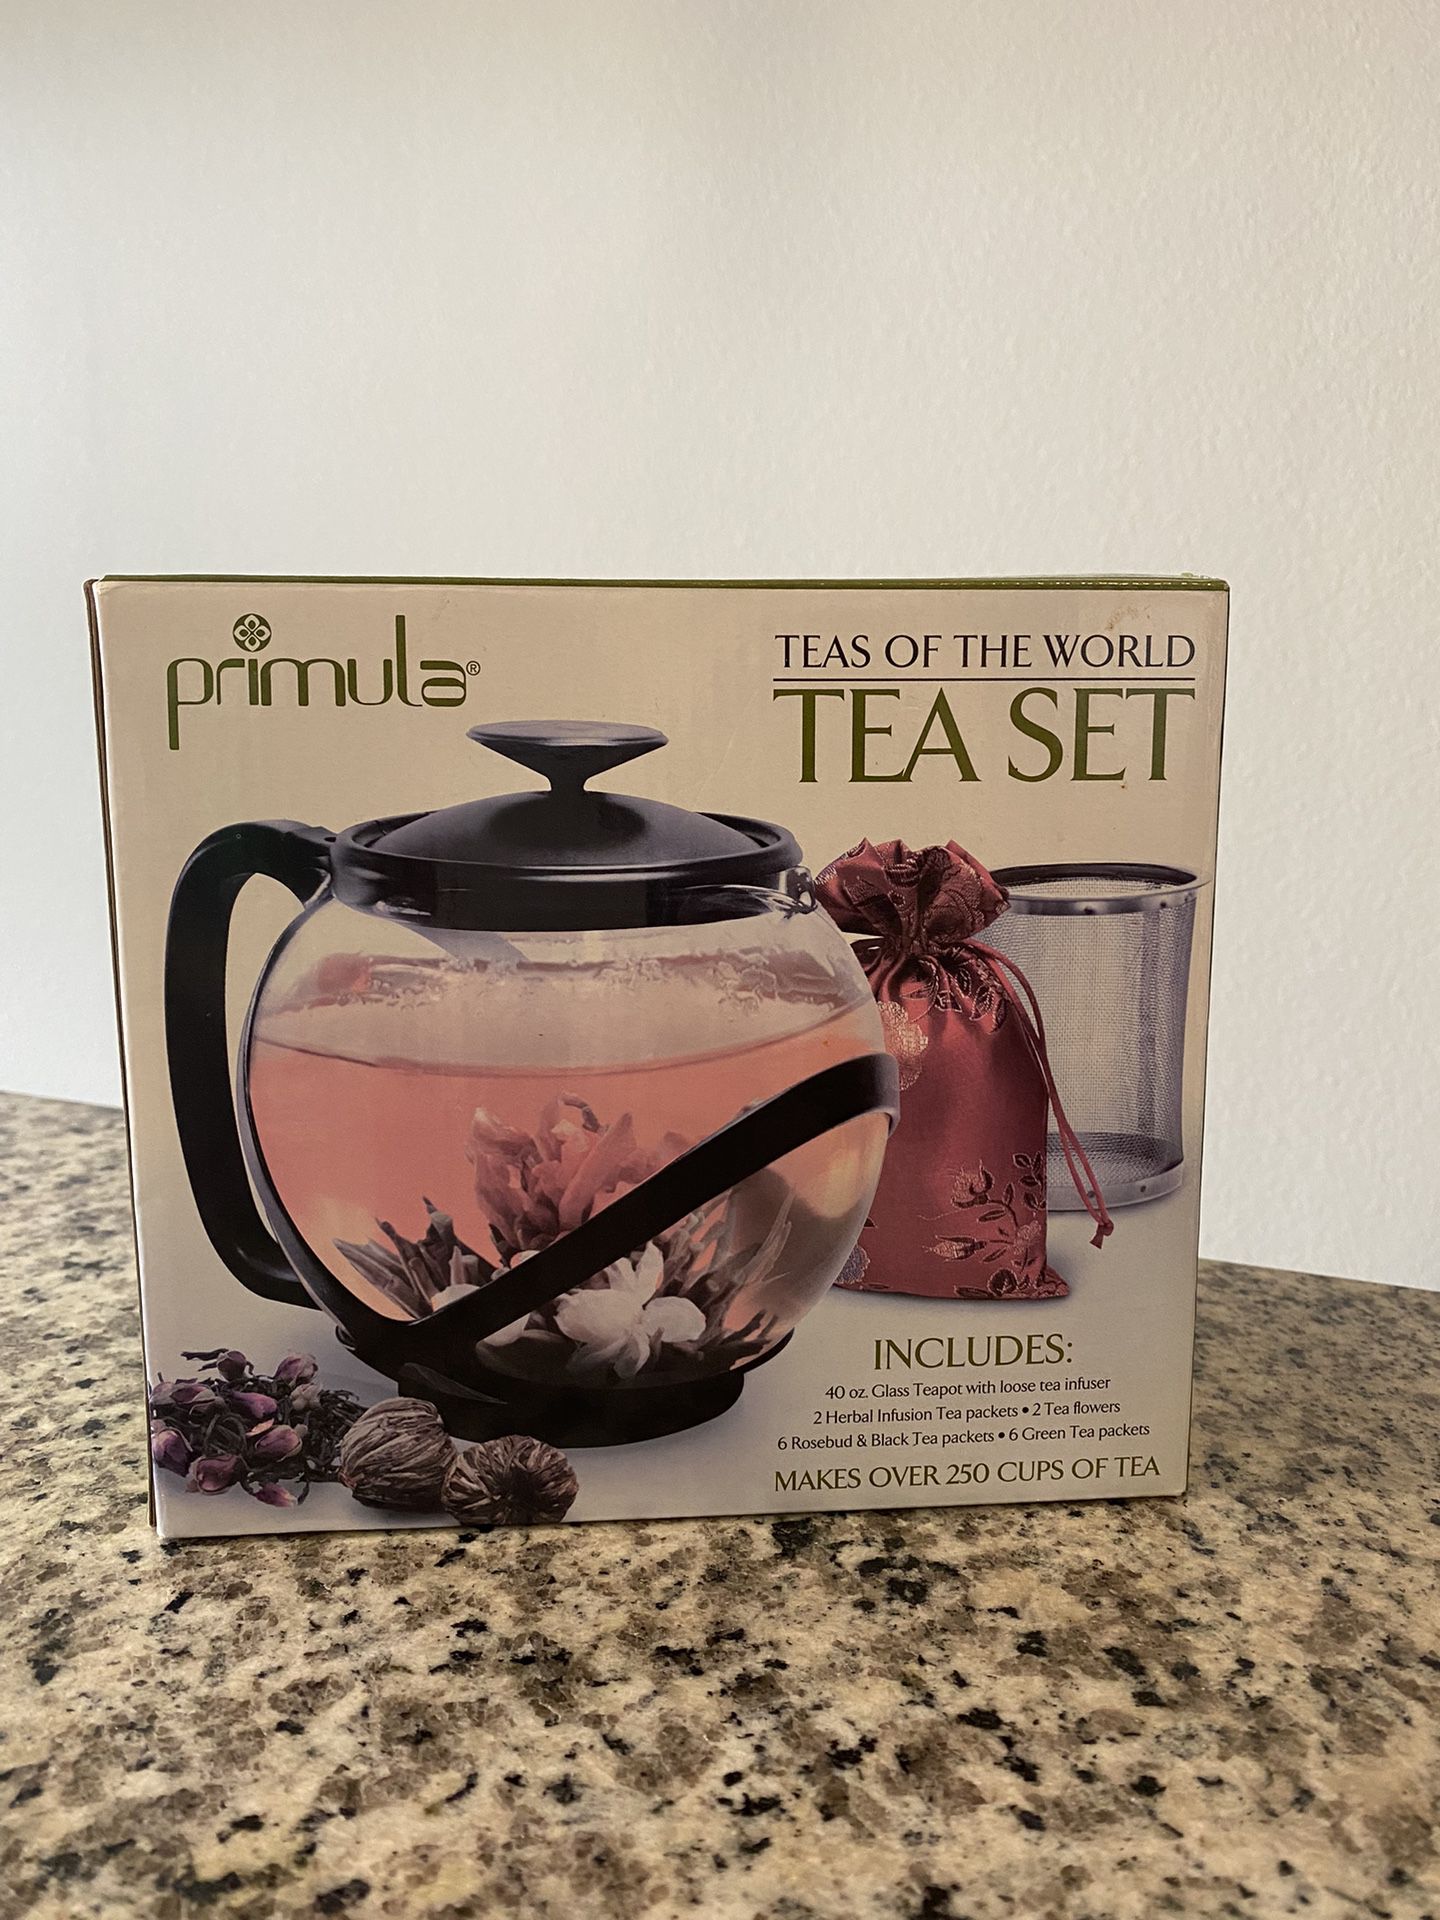 NEW Tea Pot Infuser with Teas